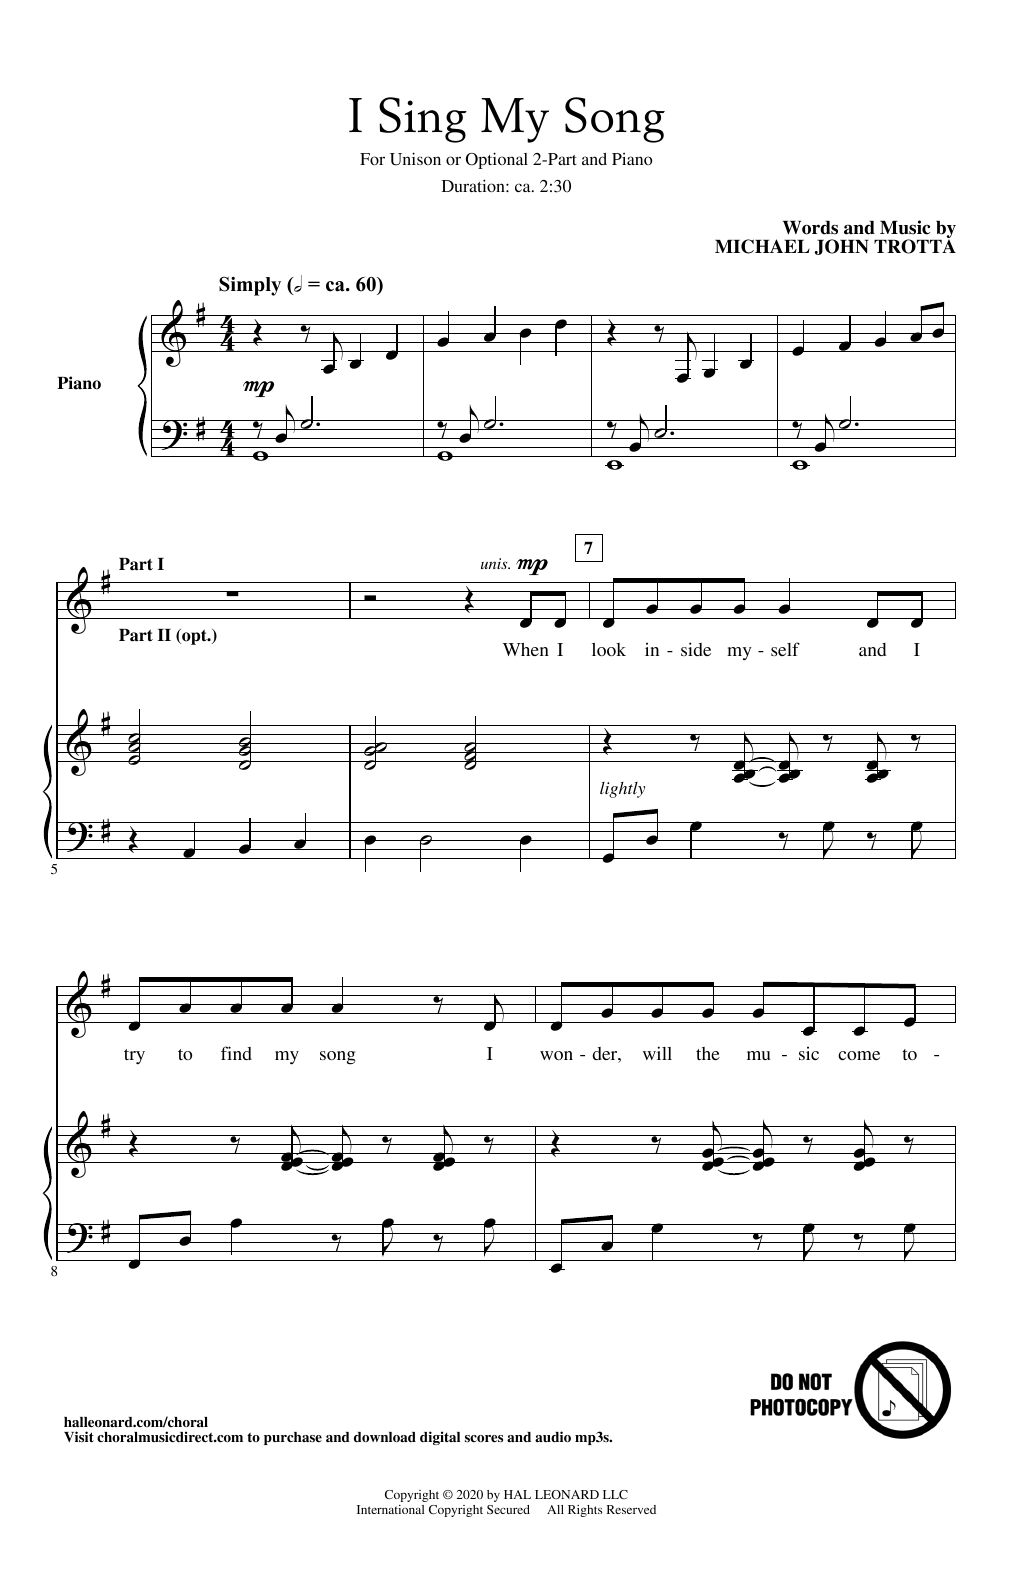 Michael John Trotta I Sing My Song Sheet Music Notes & Chords for 2-Part Choir - Download or Print PDF